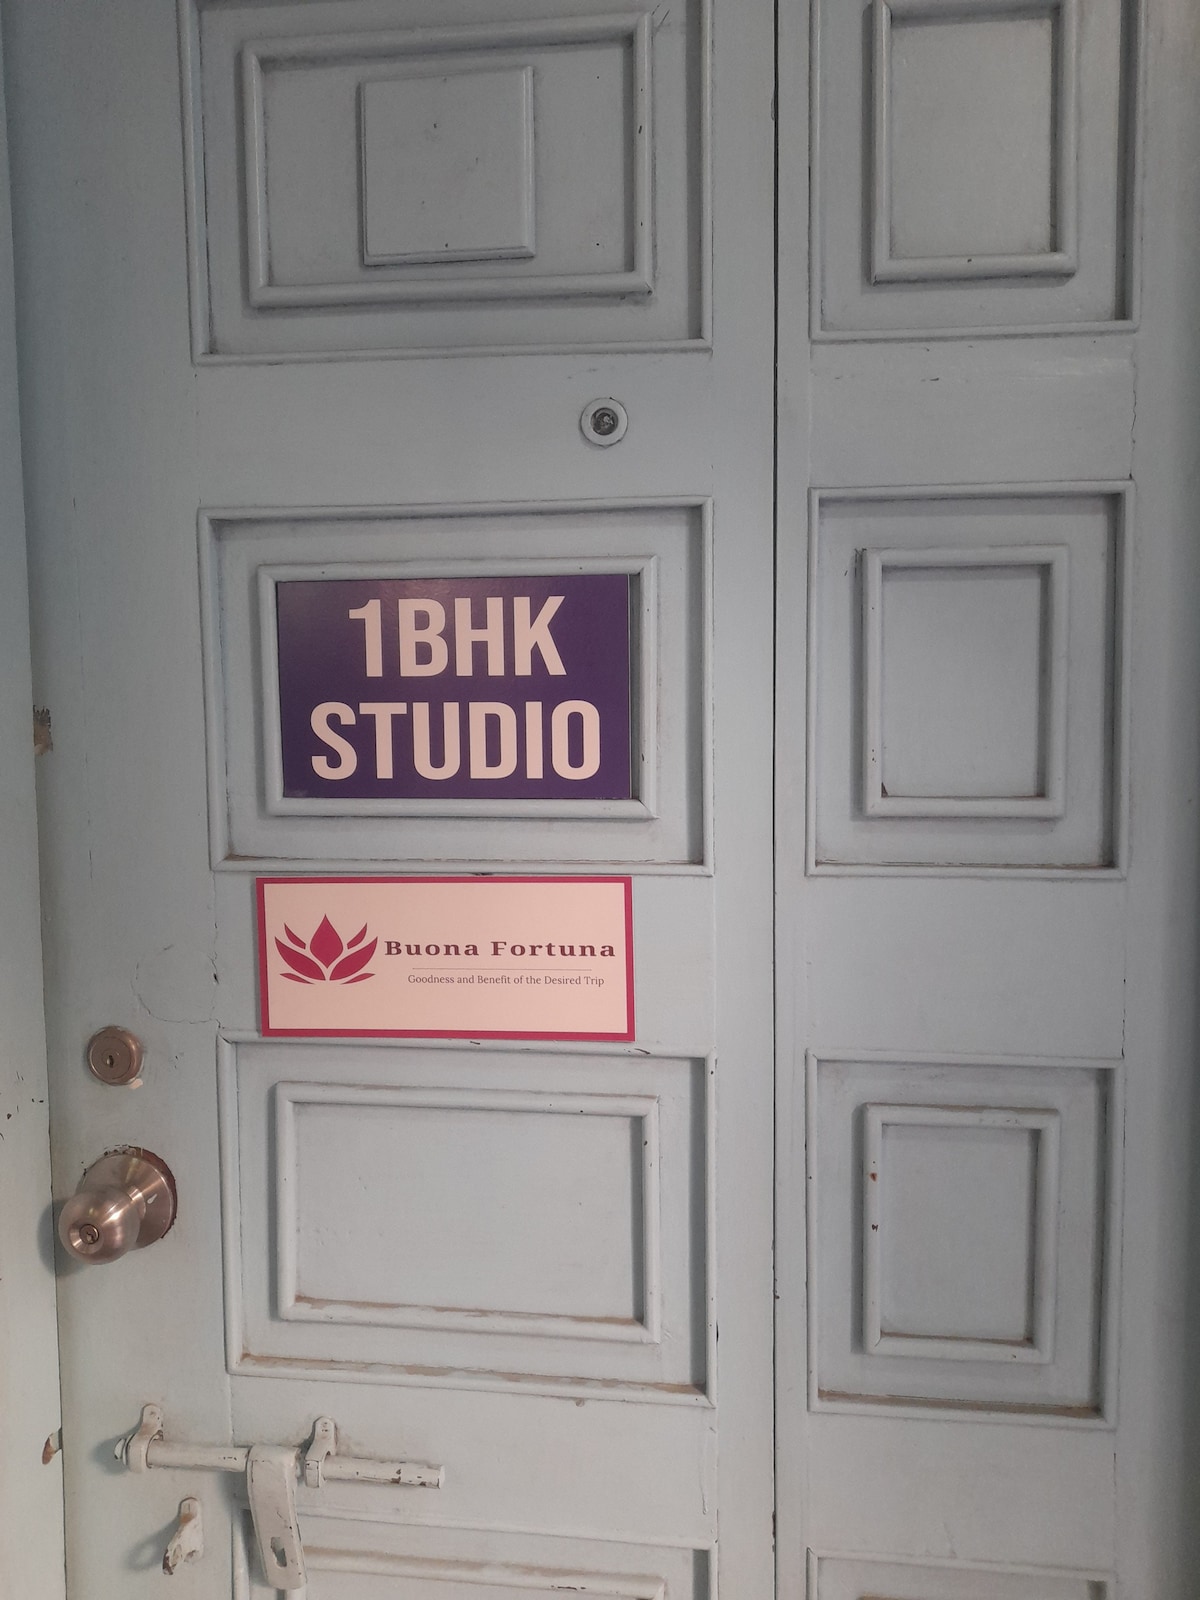 Studio/1BHK flat in Bandra by BF